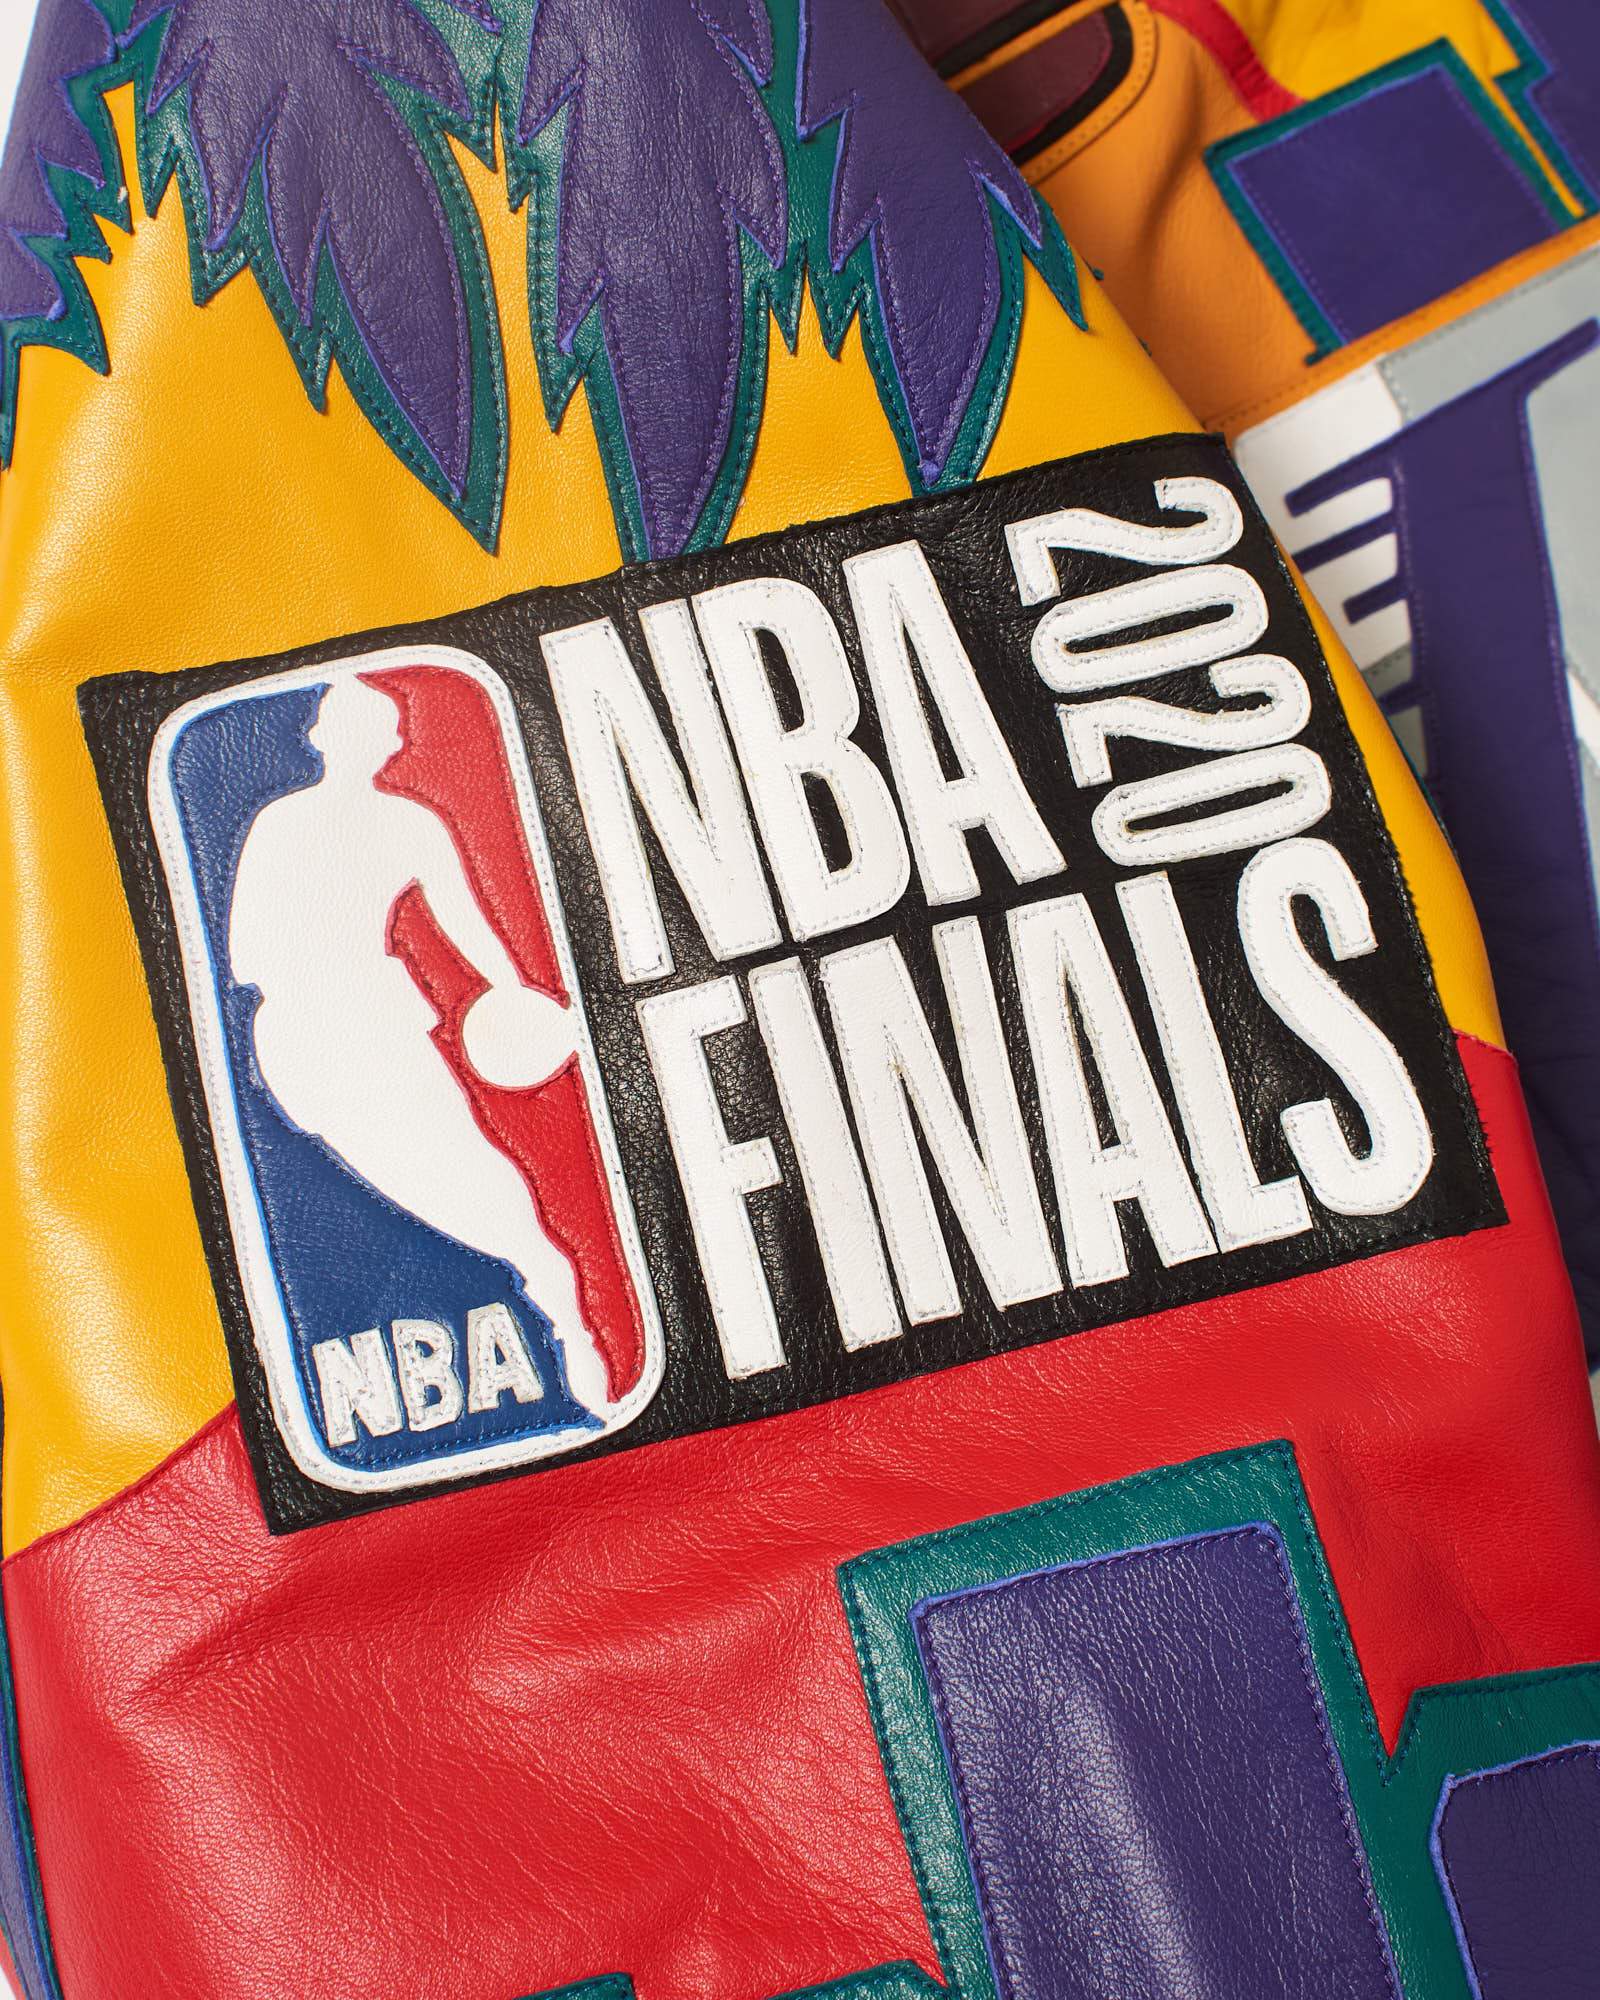 METCHA  NBA Lakers Championship leather jacket by Jeff Hamilton